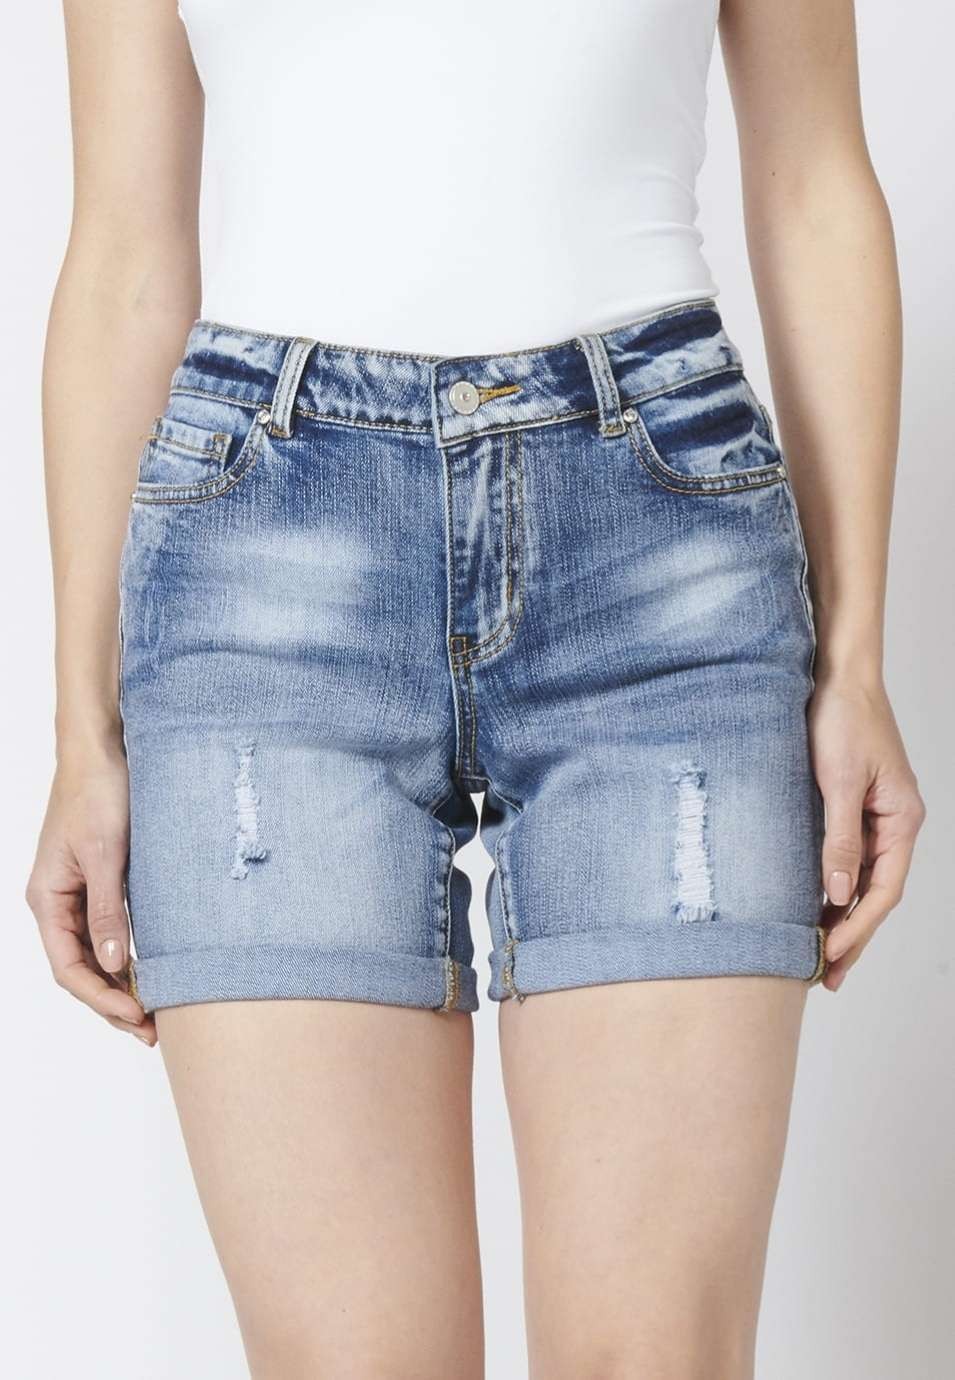 Damen-Jeansshorts, elastische Jeansshorts oberhalb des Knies mit zerrissenen Details